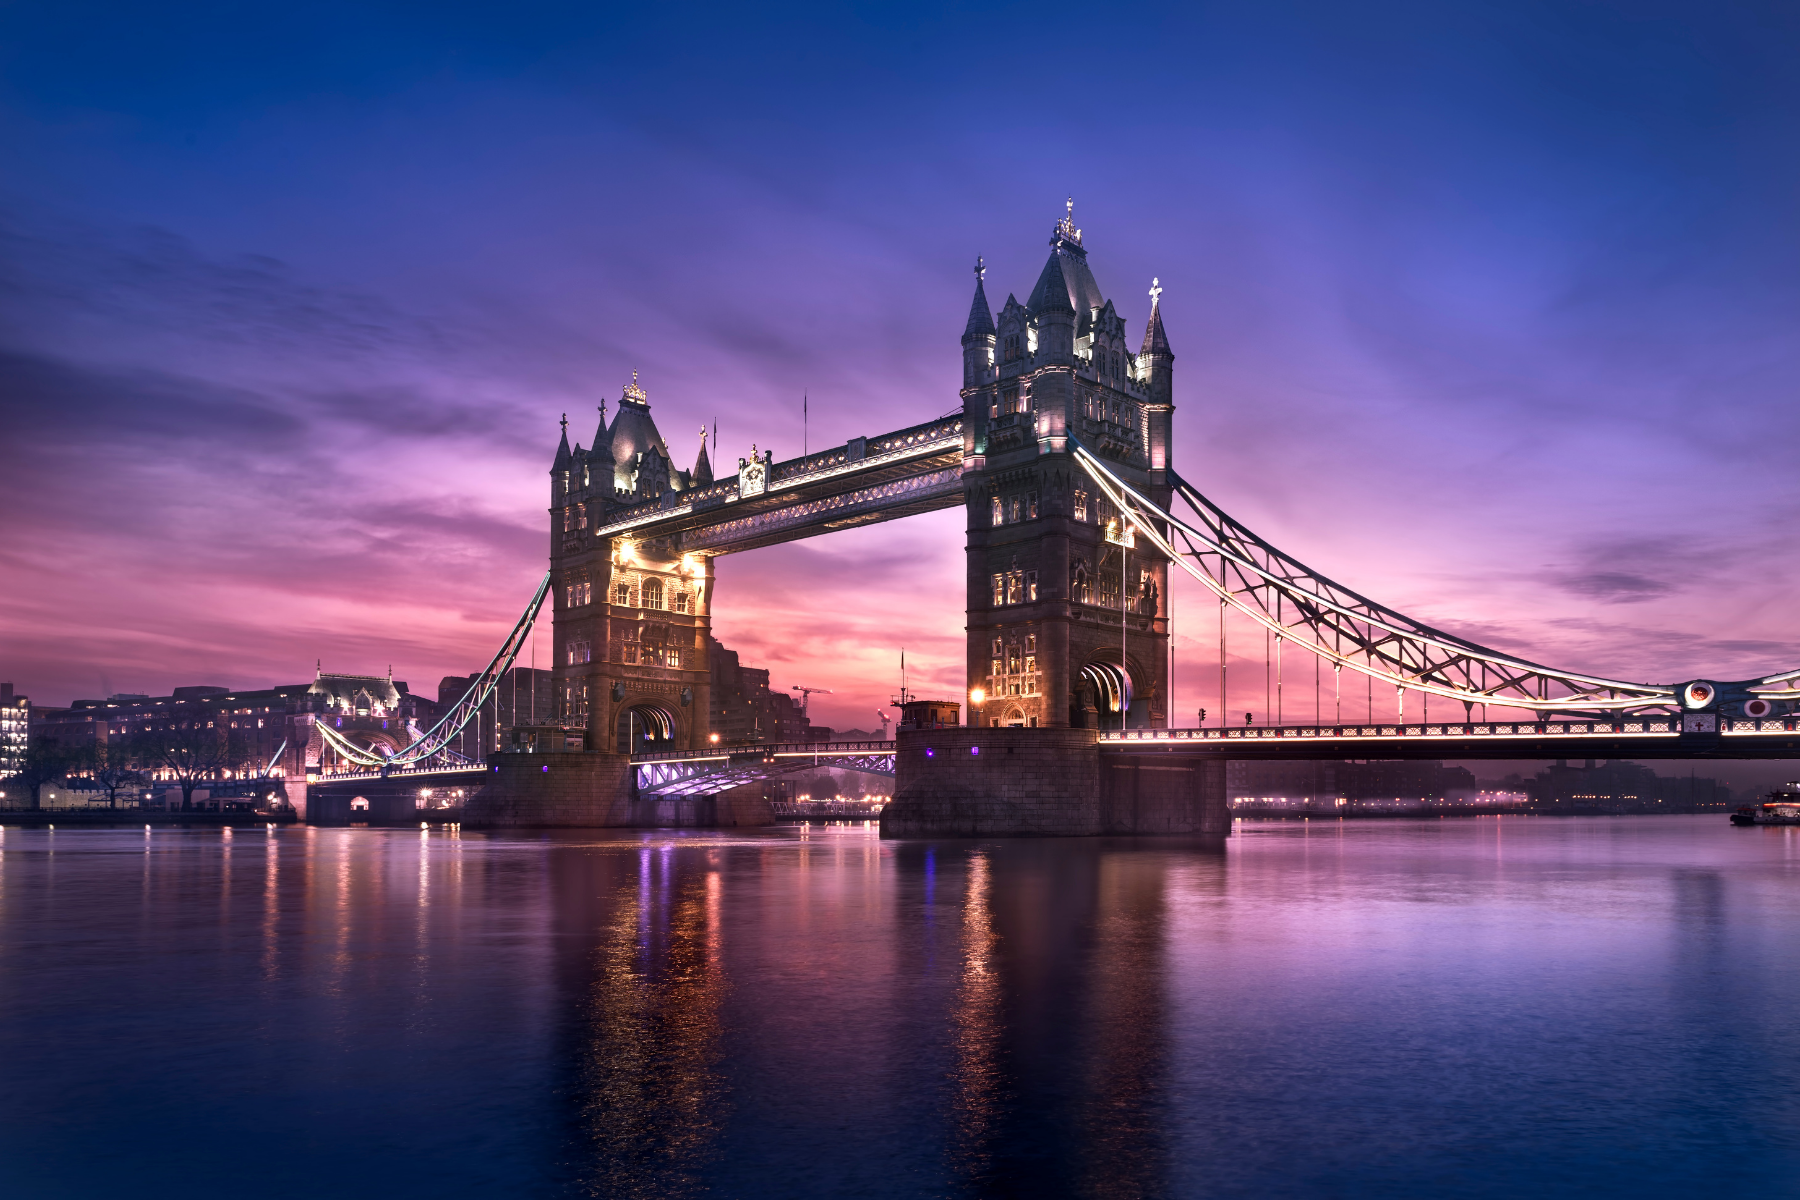 The London bridge at twilight.